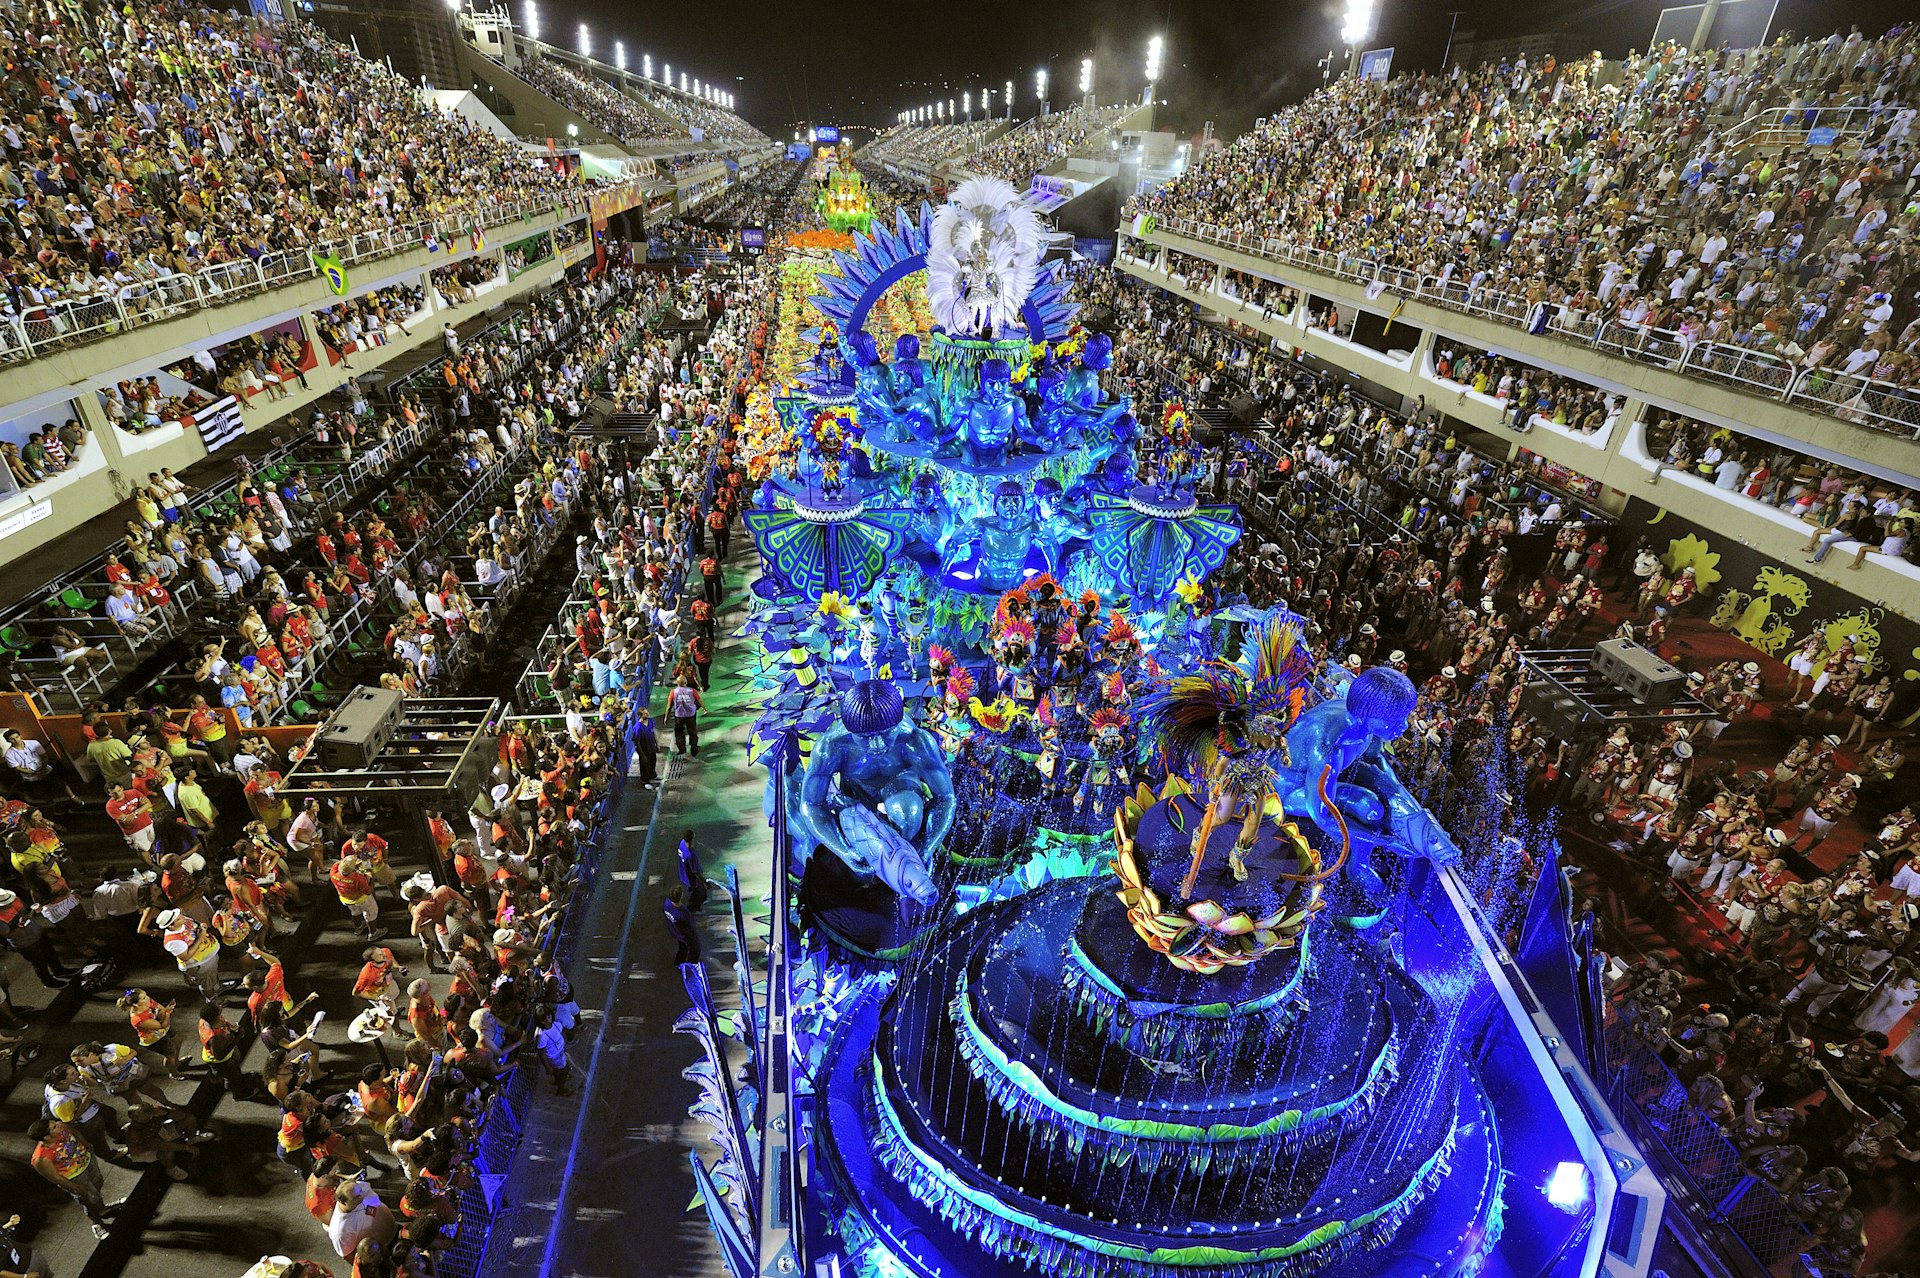 A samba school parading in Sambadromo, the carnival stadium in Rio de Janeiro